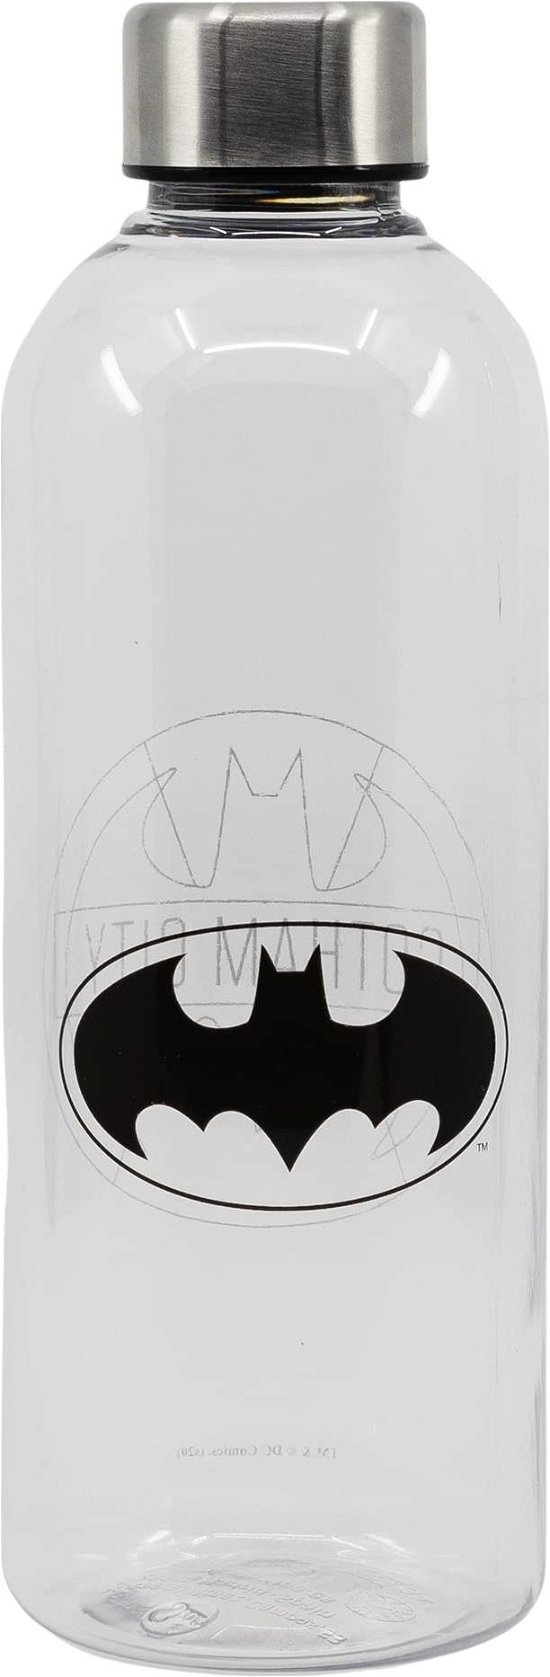 Plastic Bottle - Size 850ml - Batman - Produtos -  - 8412497855650 - 